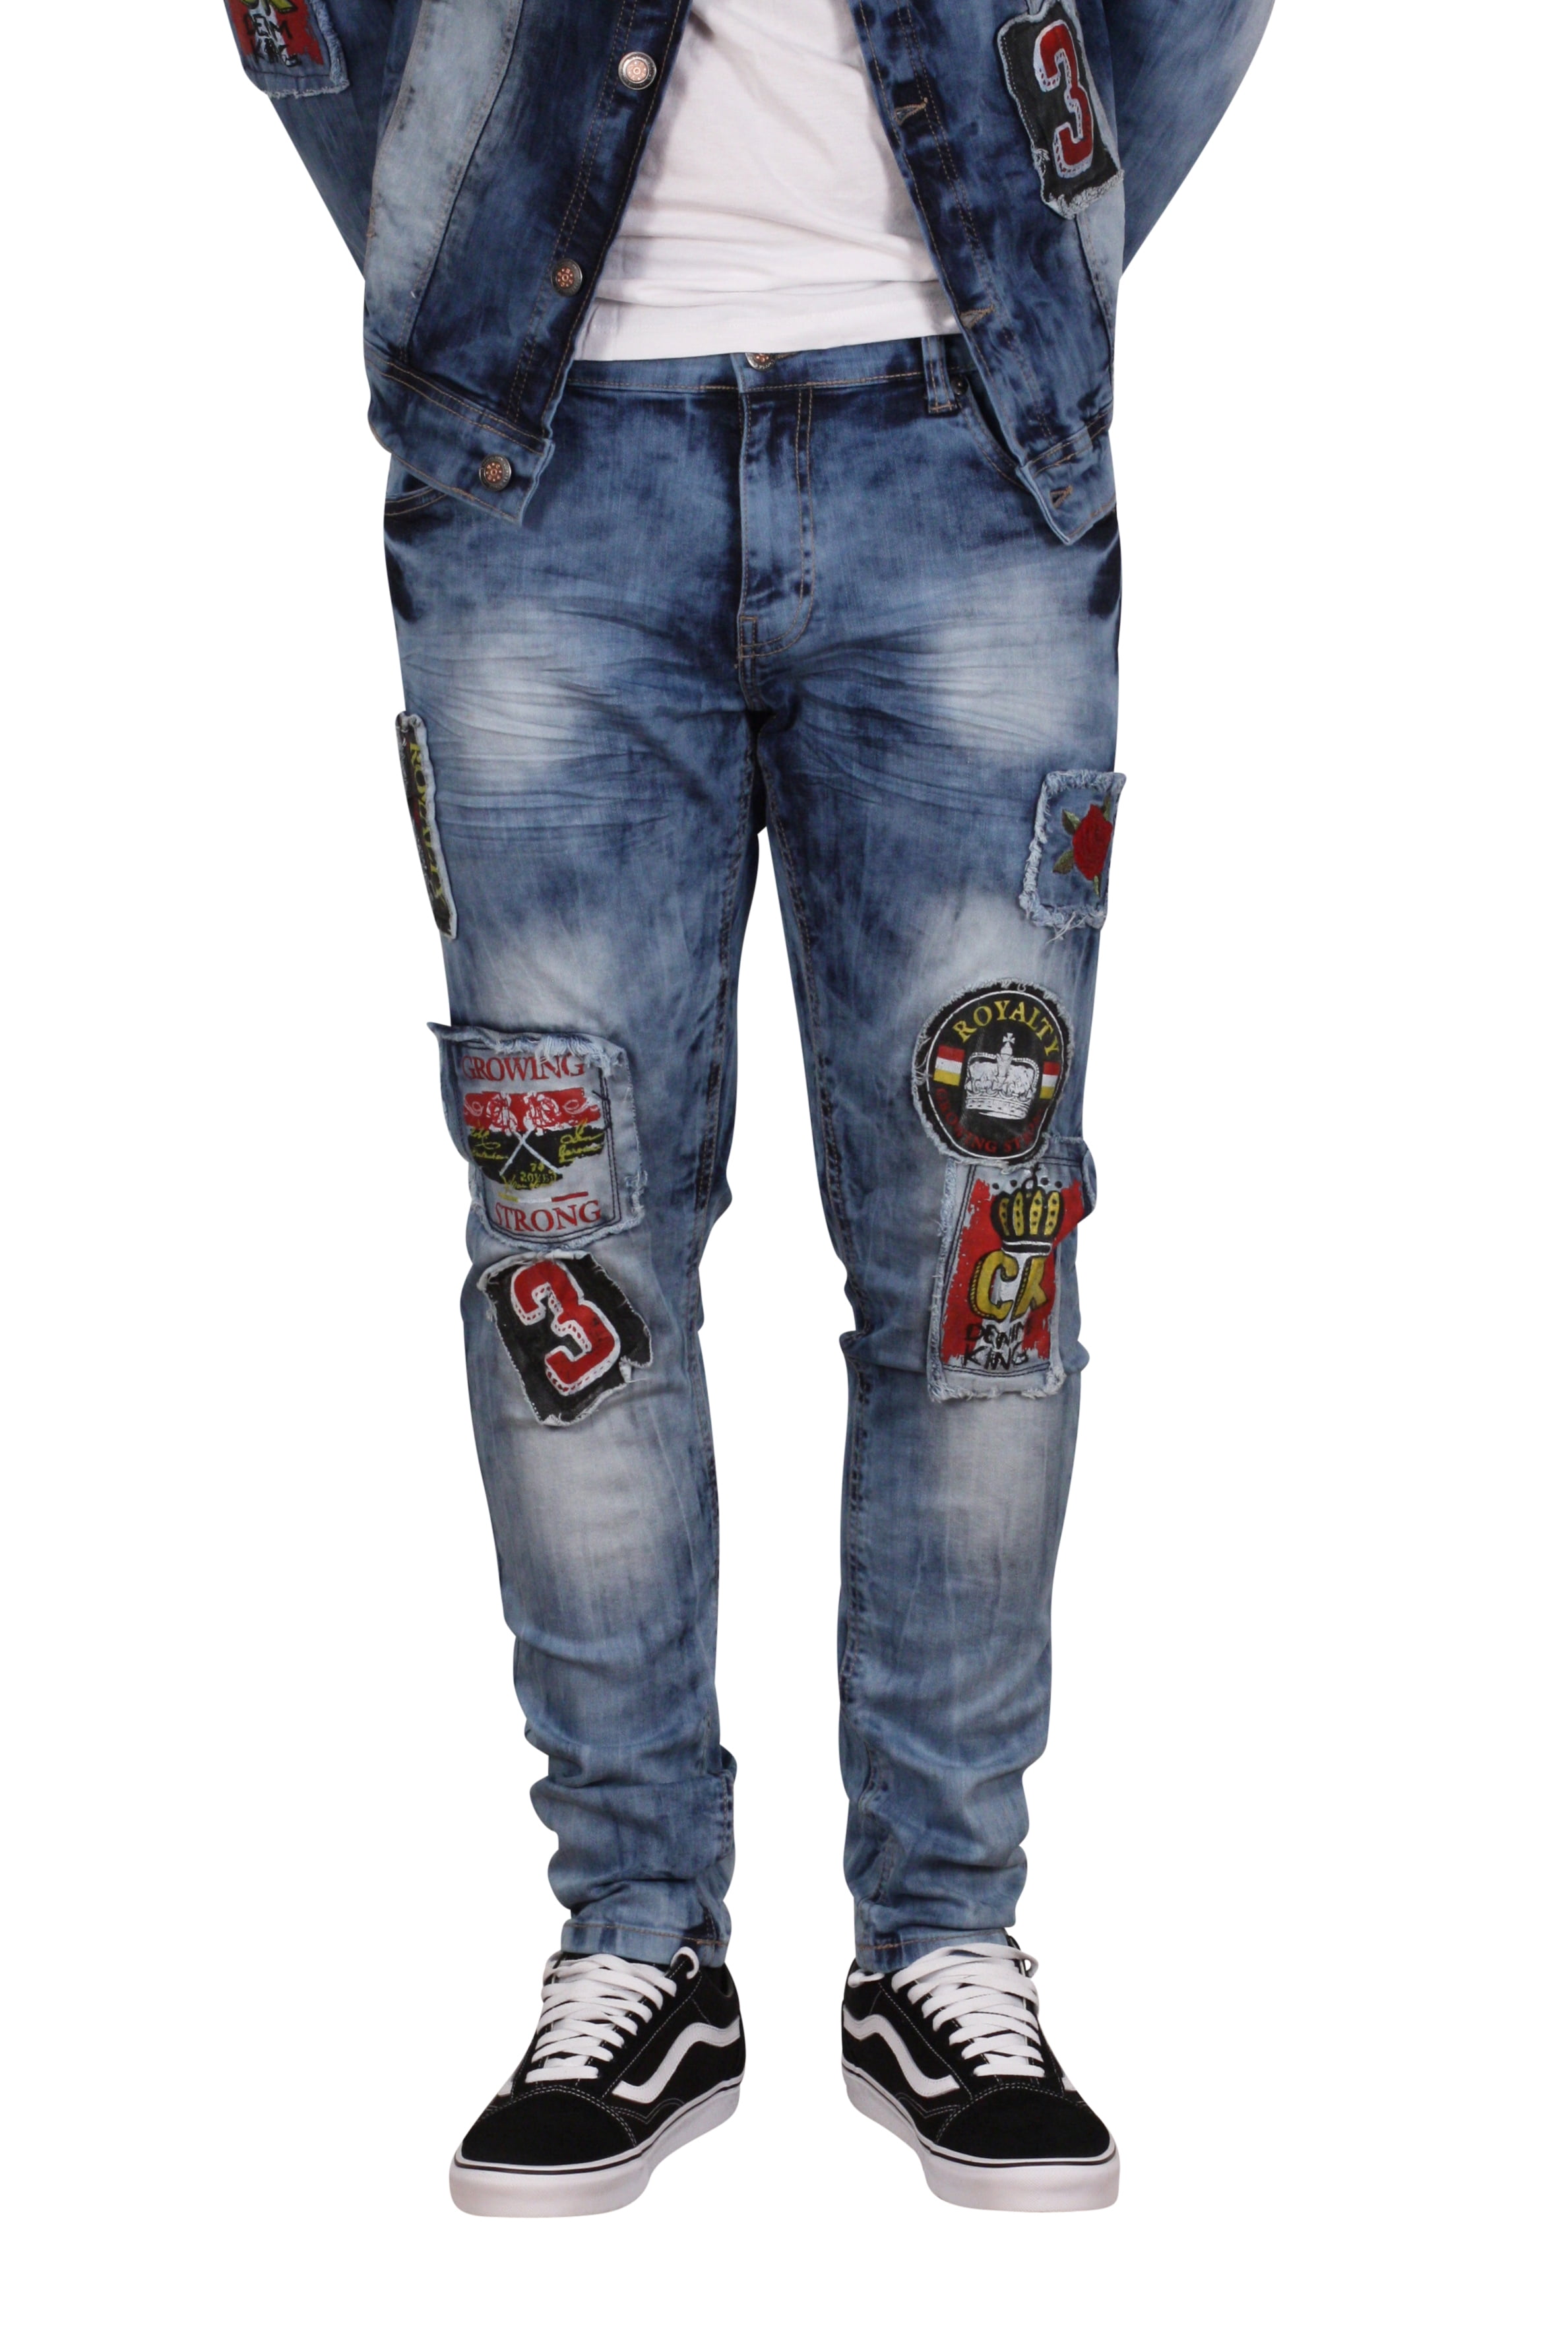 rivet supply co jeans